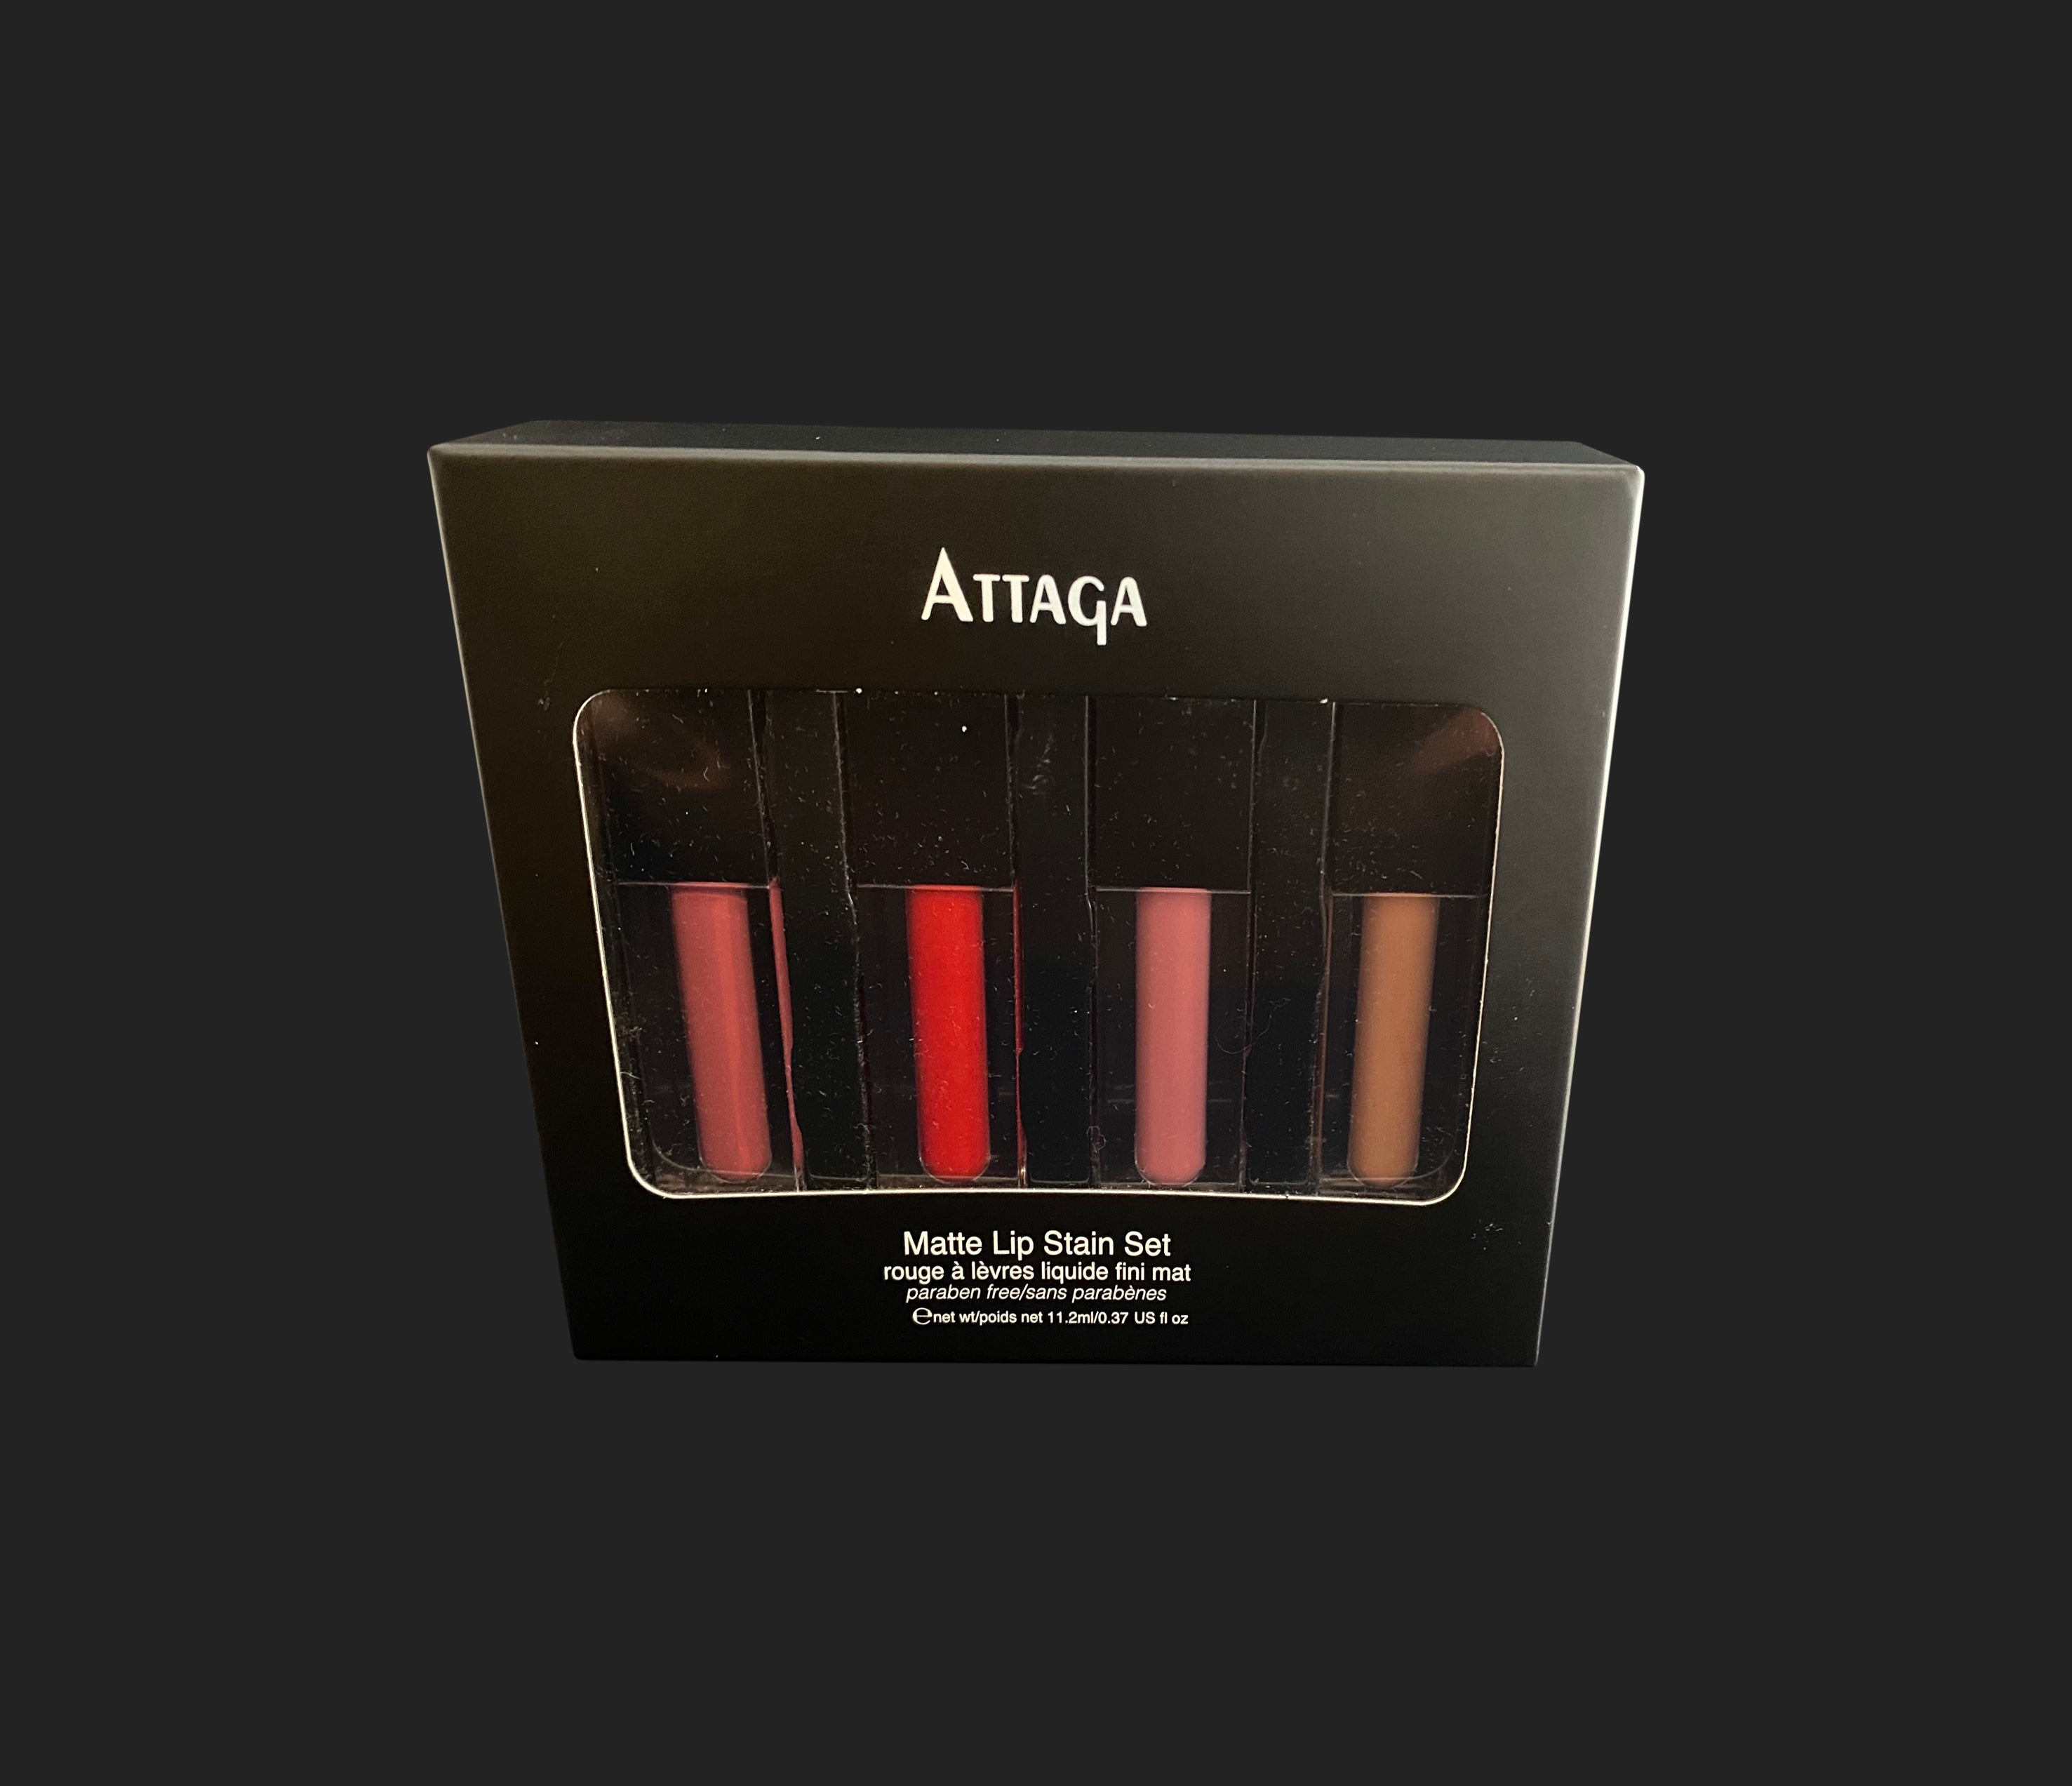 ATTAGA - Matte Lip Stain Set